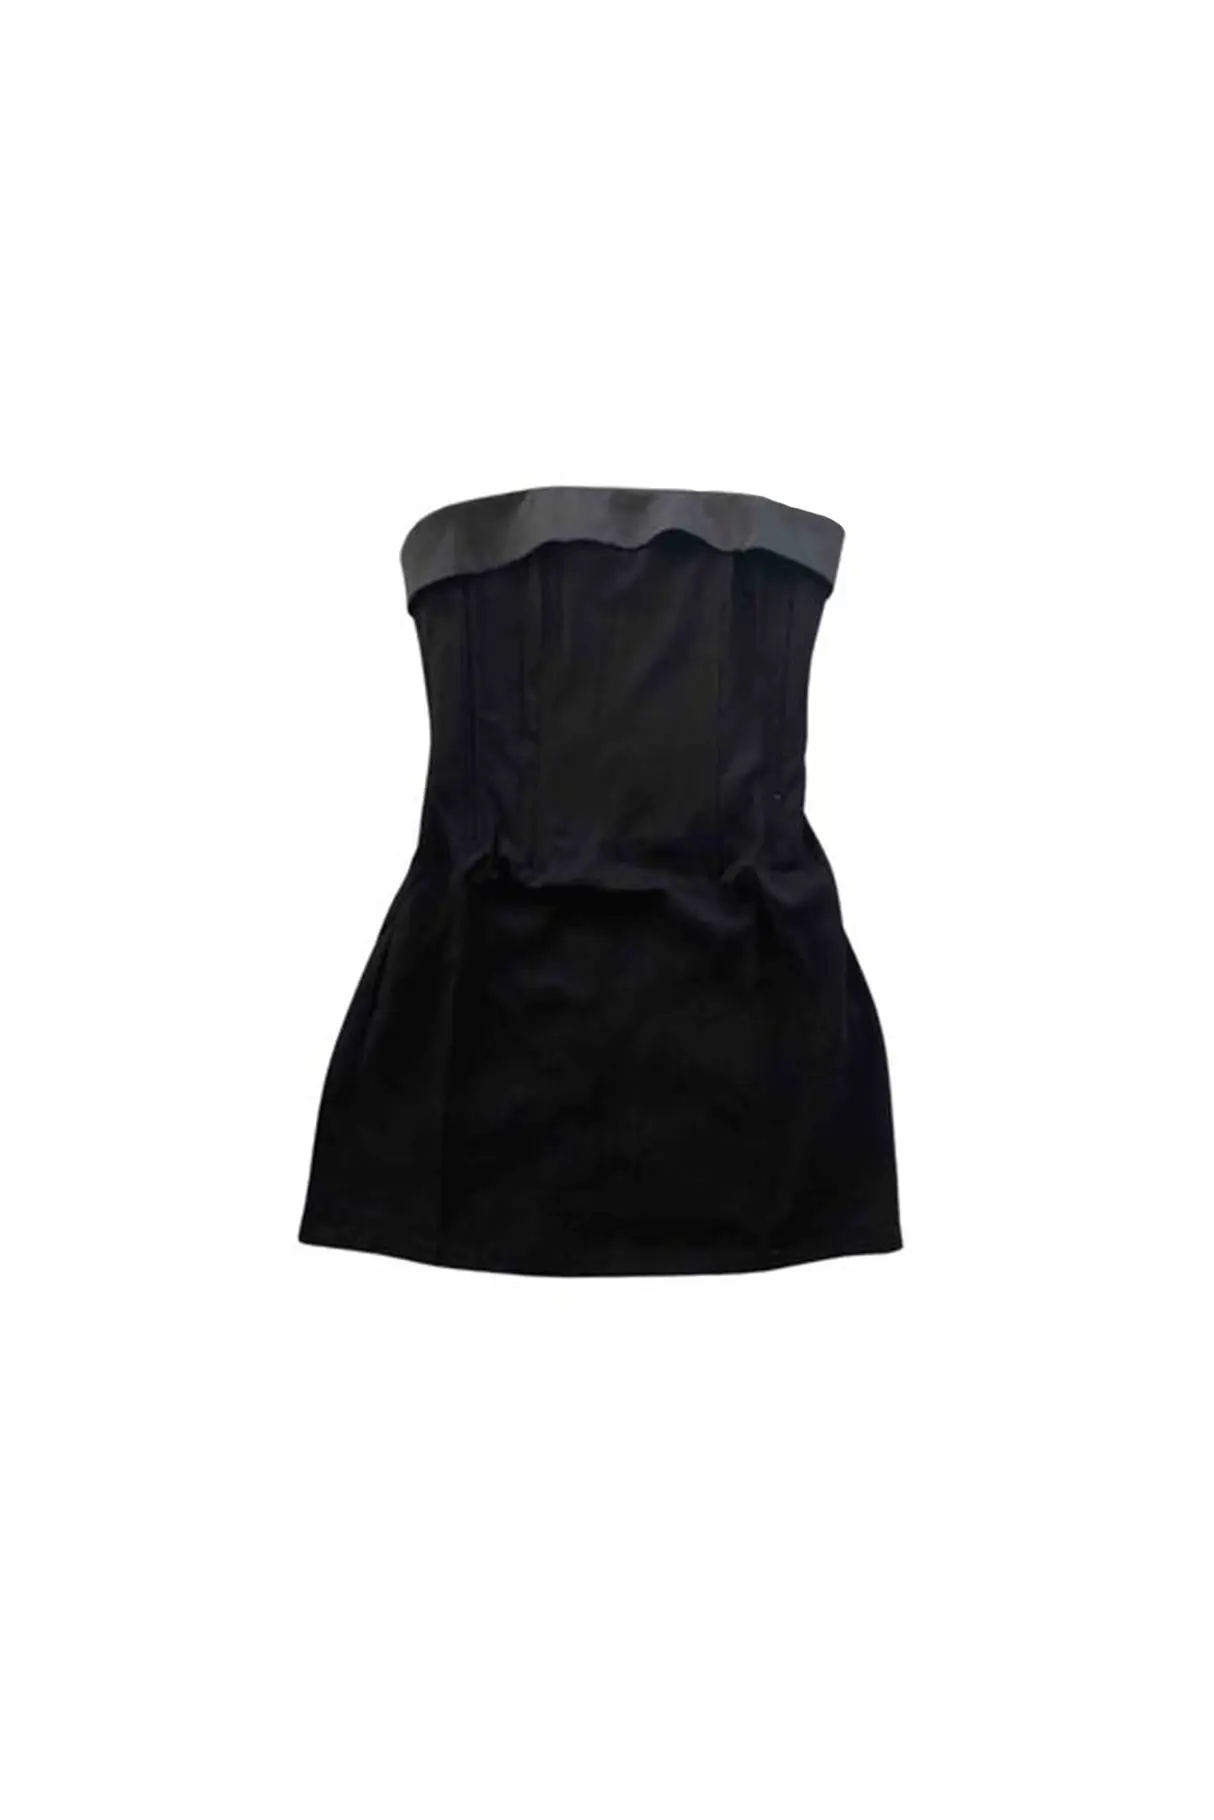 black-cotton-with-jean-dress.jpg